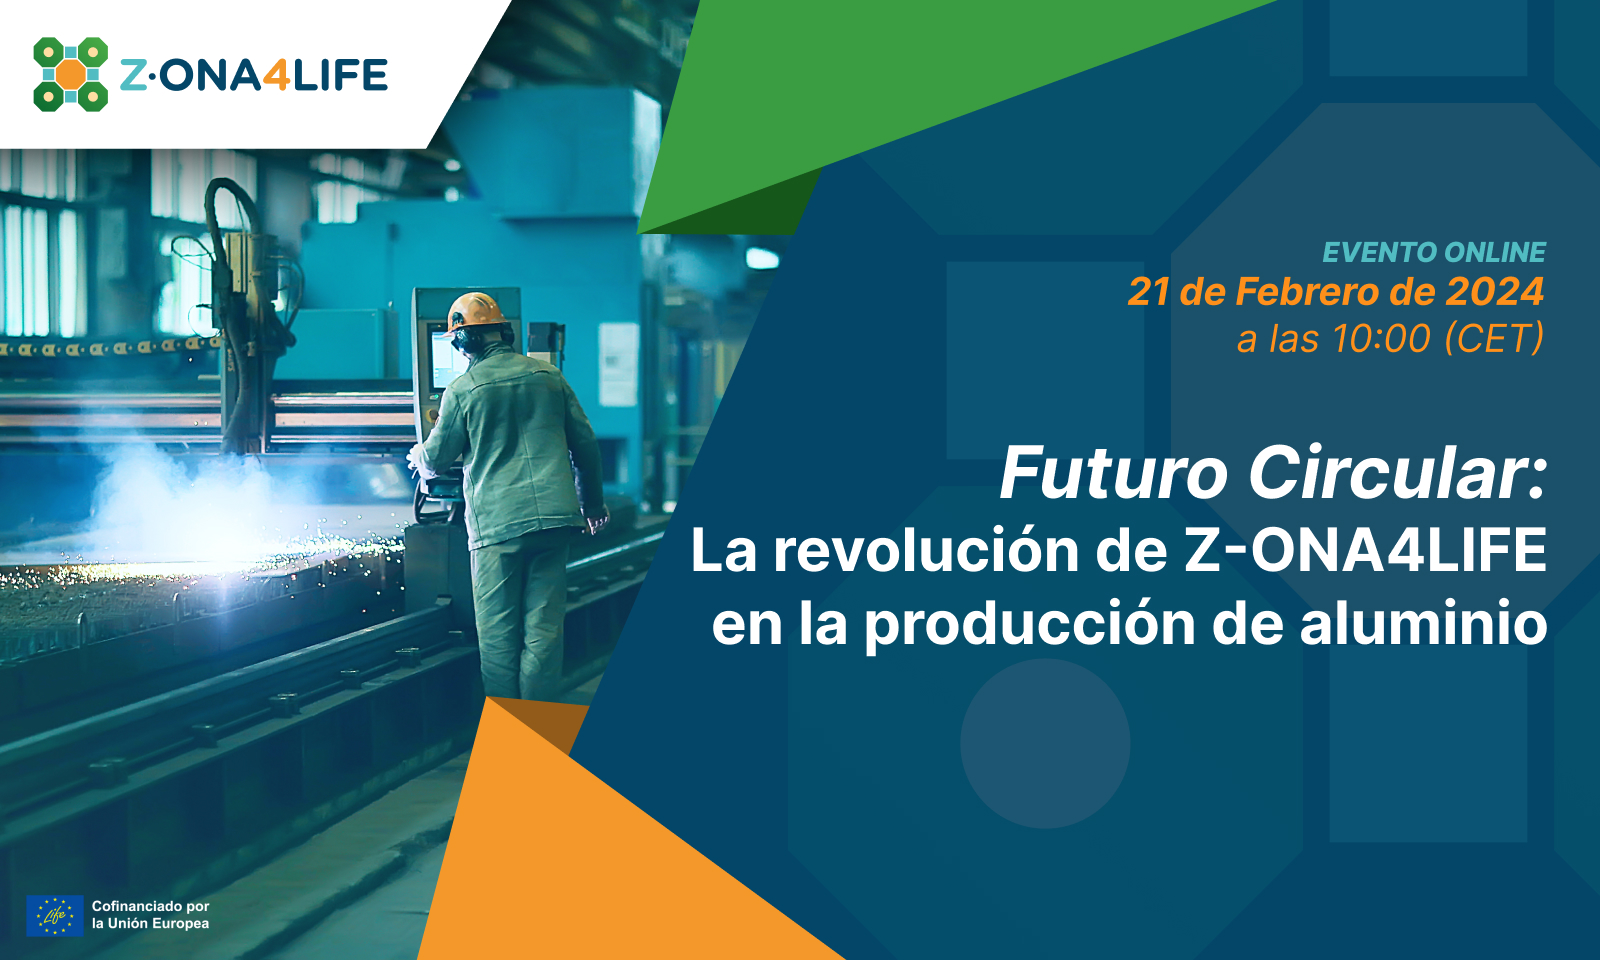 Circular Futures: Z-ONA4LIFE's revolution in aluminium production